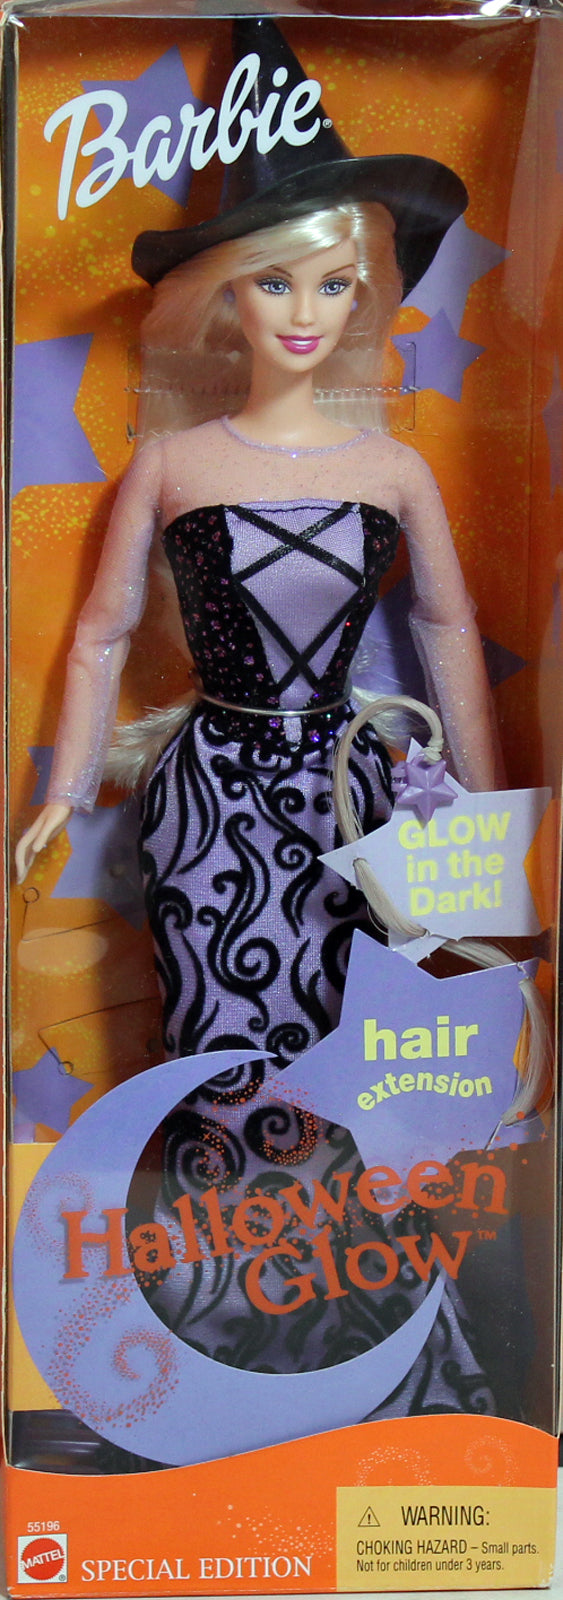 2002 Halloween Glow Barbie (55196)